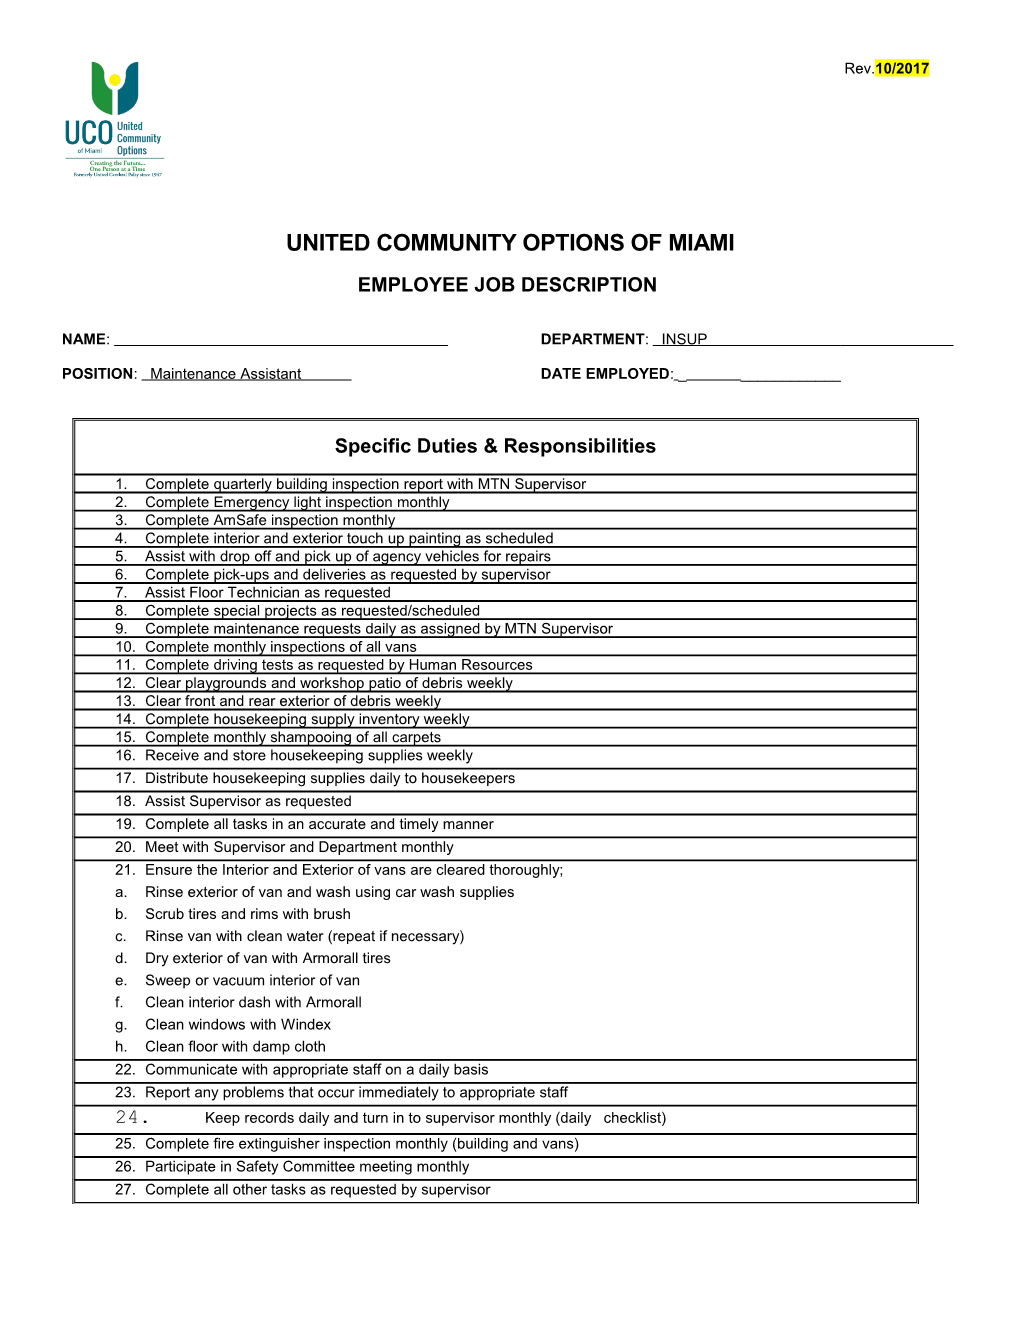 United Community Options of Miami